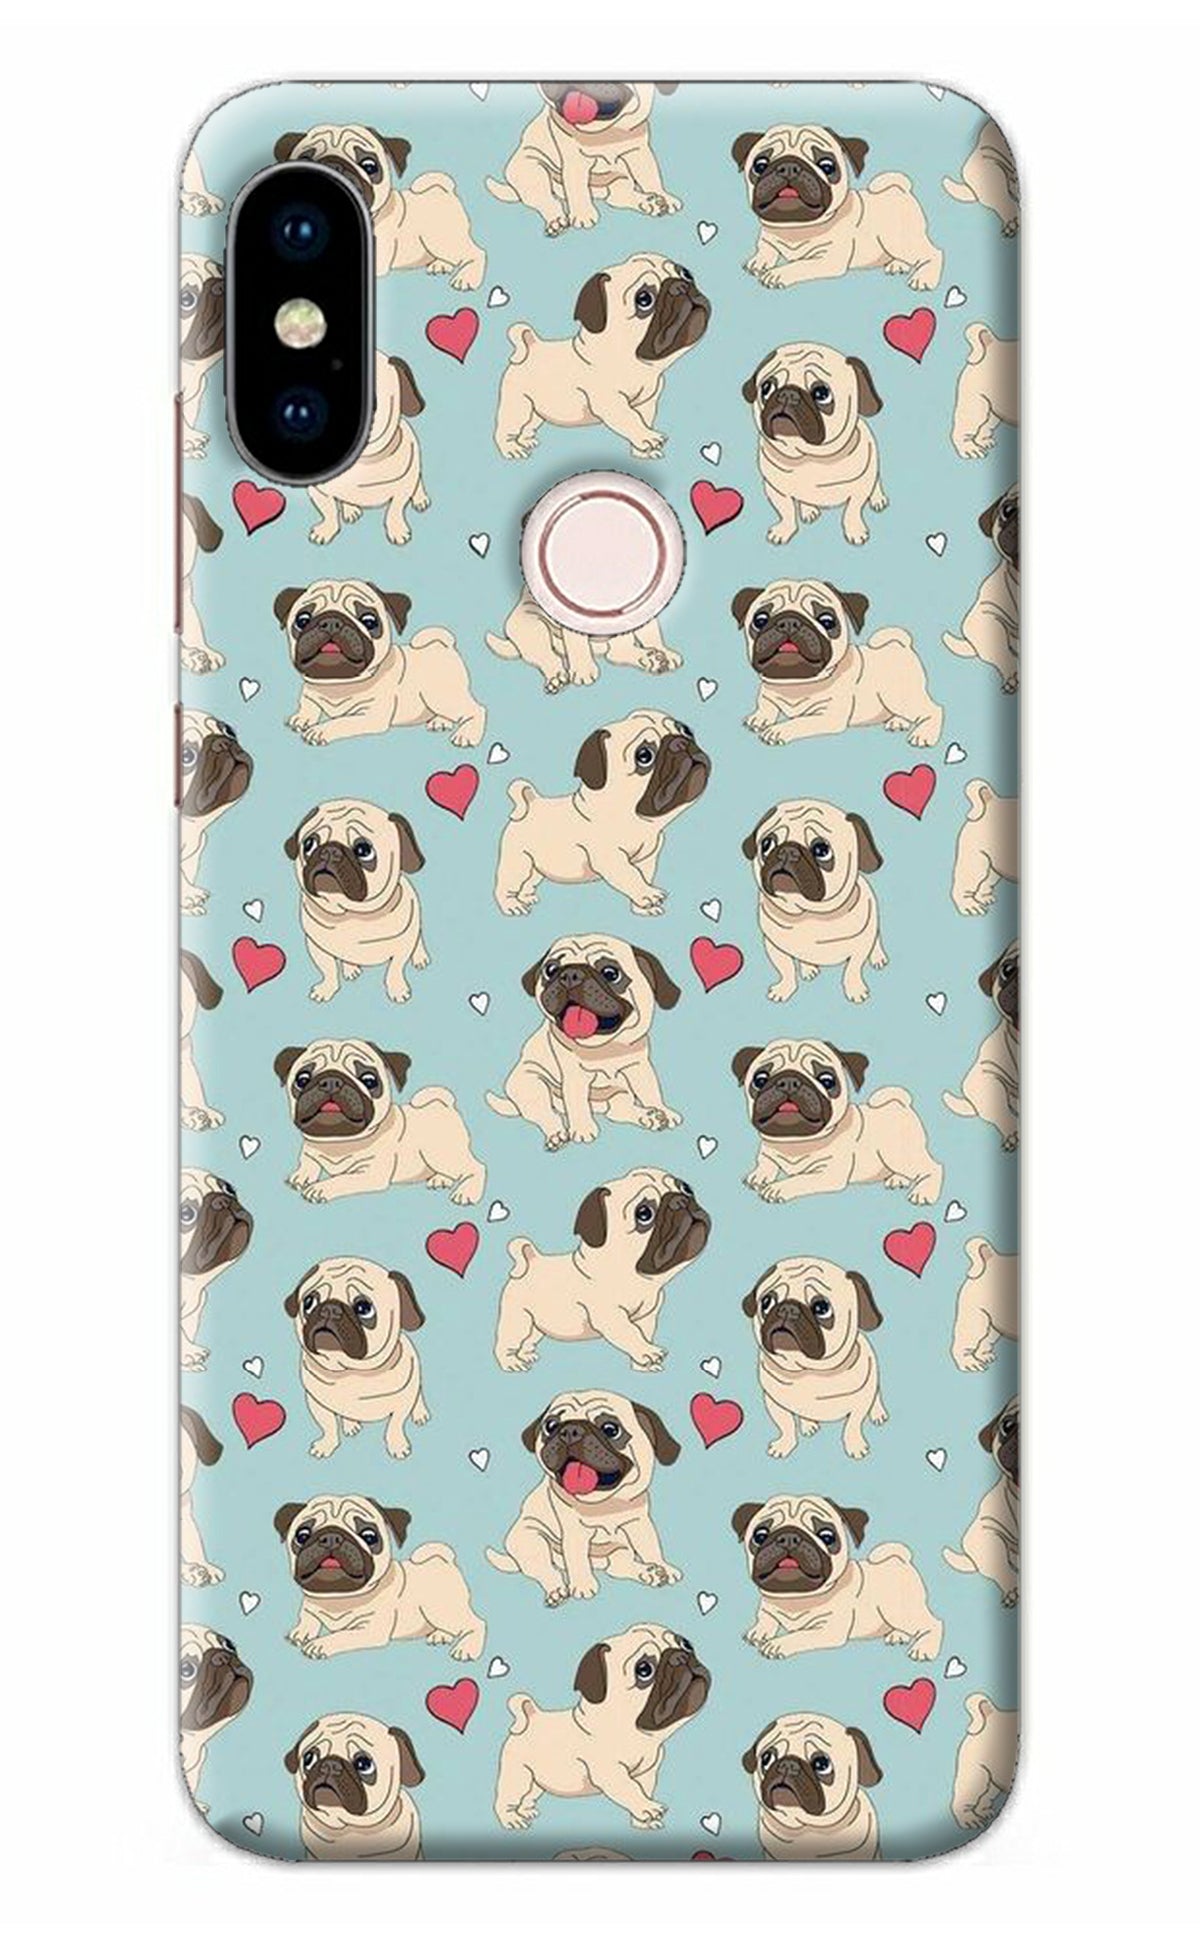 Pug Dog Redmi Note 5 Pro Back Cover